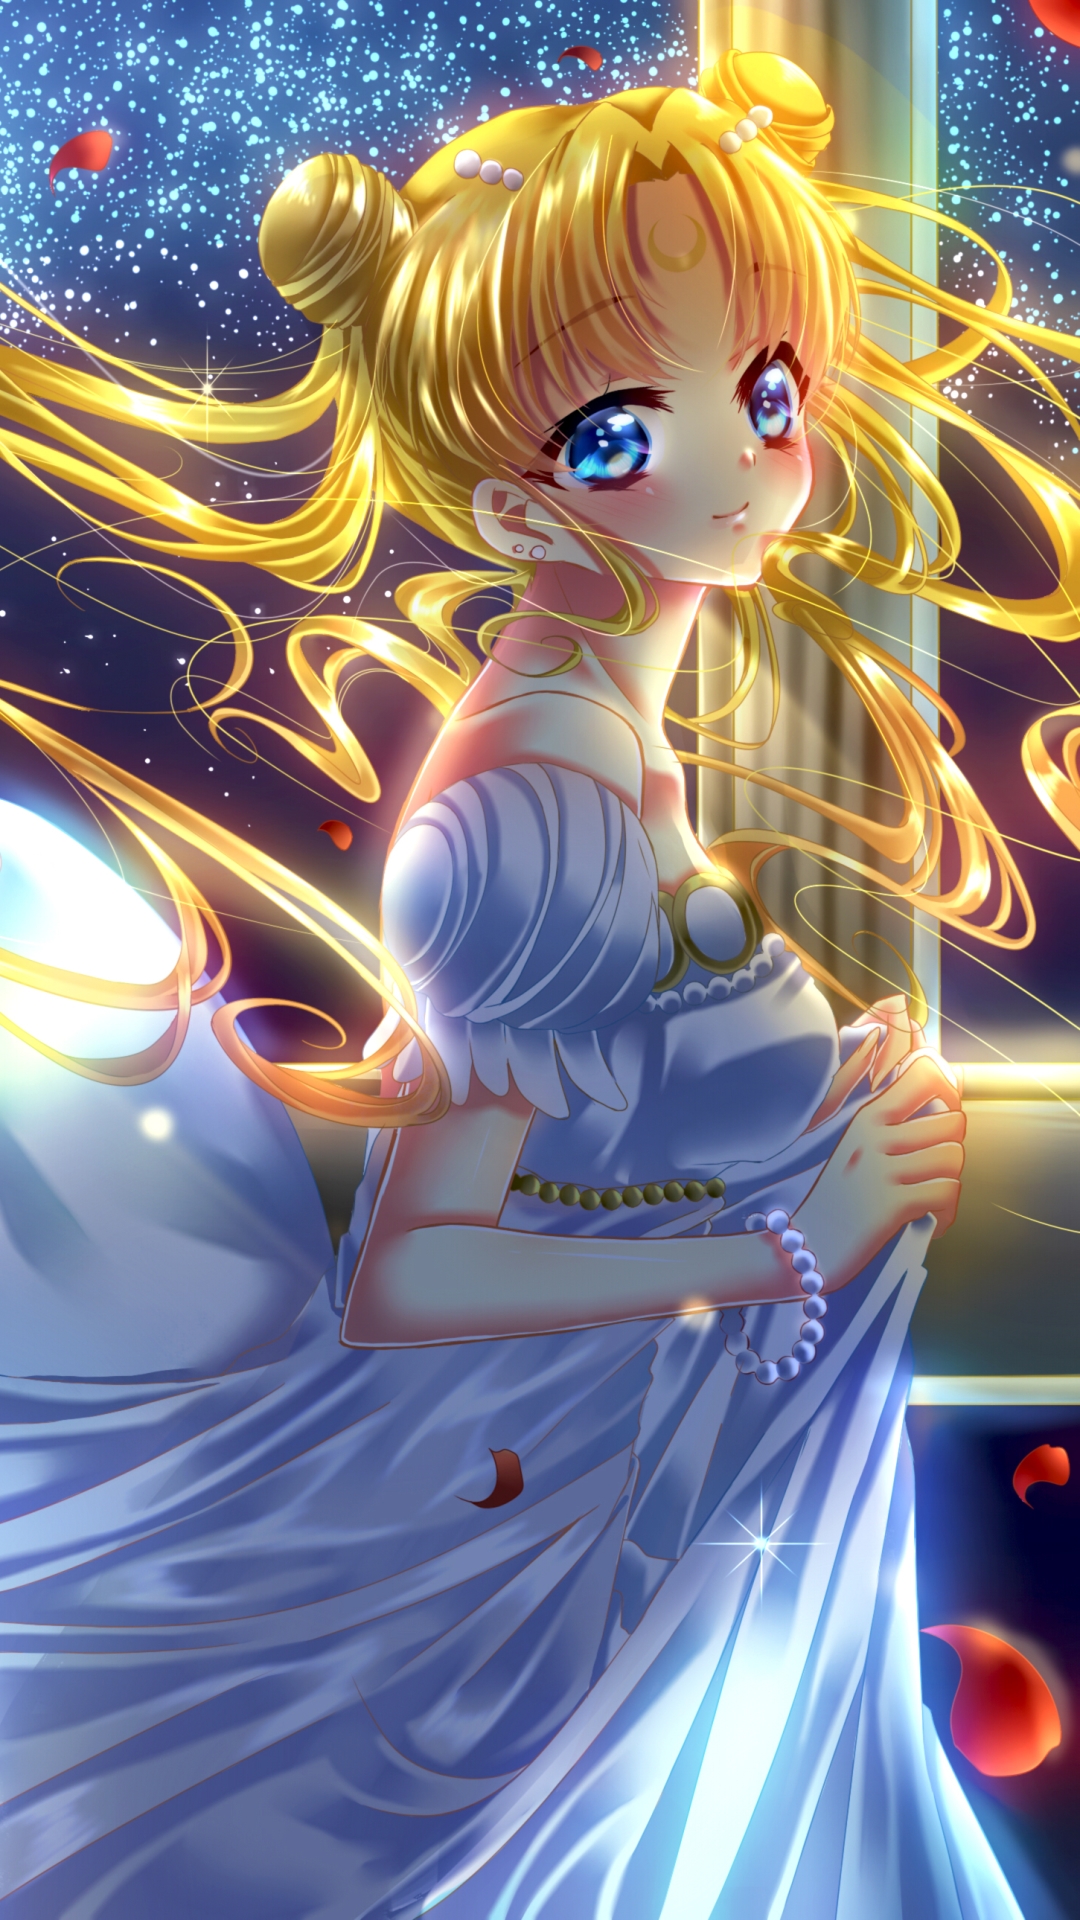 Sailor Moon iphone wallpaper high quality